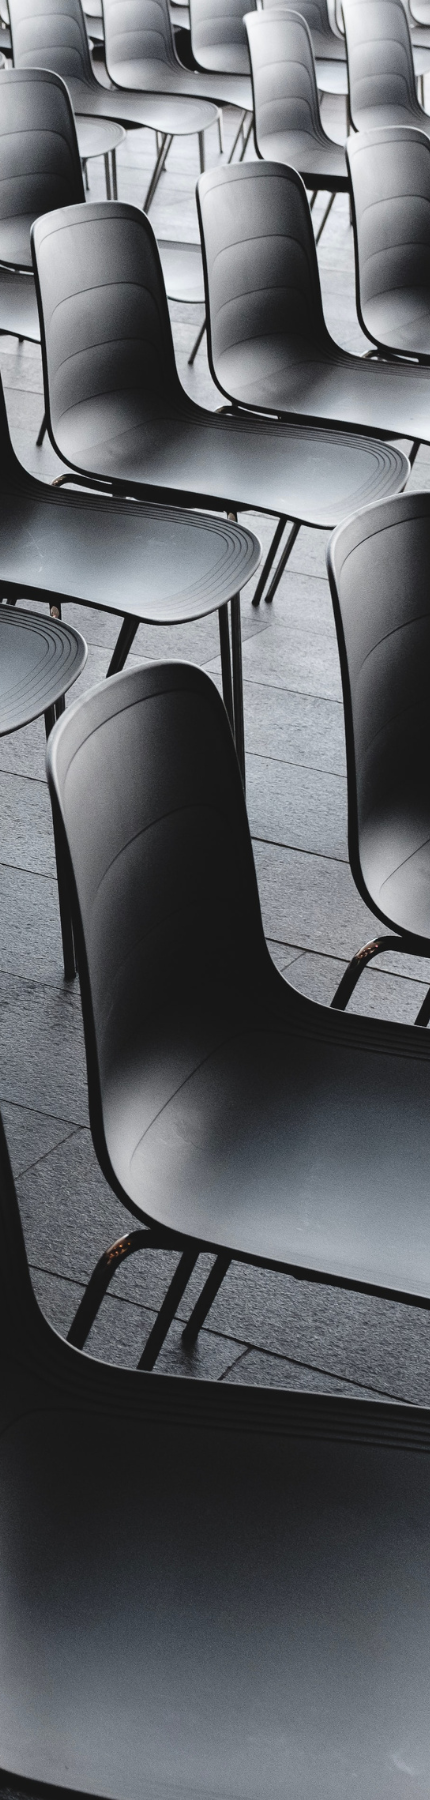 Felt pads to black designer chairs